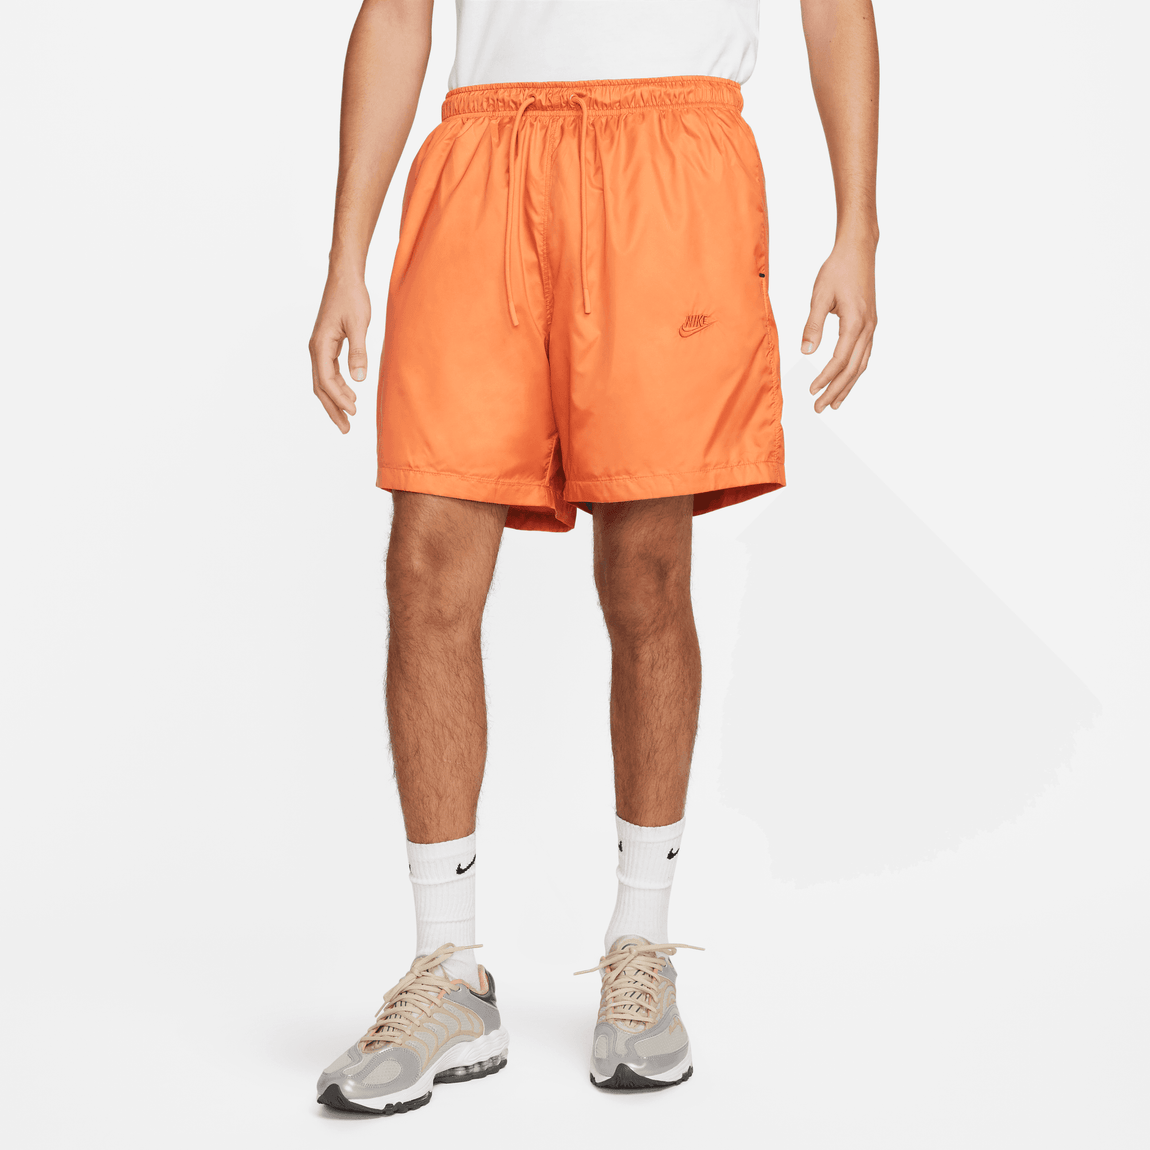 Nike Sportswear Tech Pack Woven Shorts (Hot Curry/Mars Stone-Sport Spice) - Nike Sportswear Tech Pack Woven Shorts (Hot Curry/Mars Stone-Sport Spice) - 